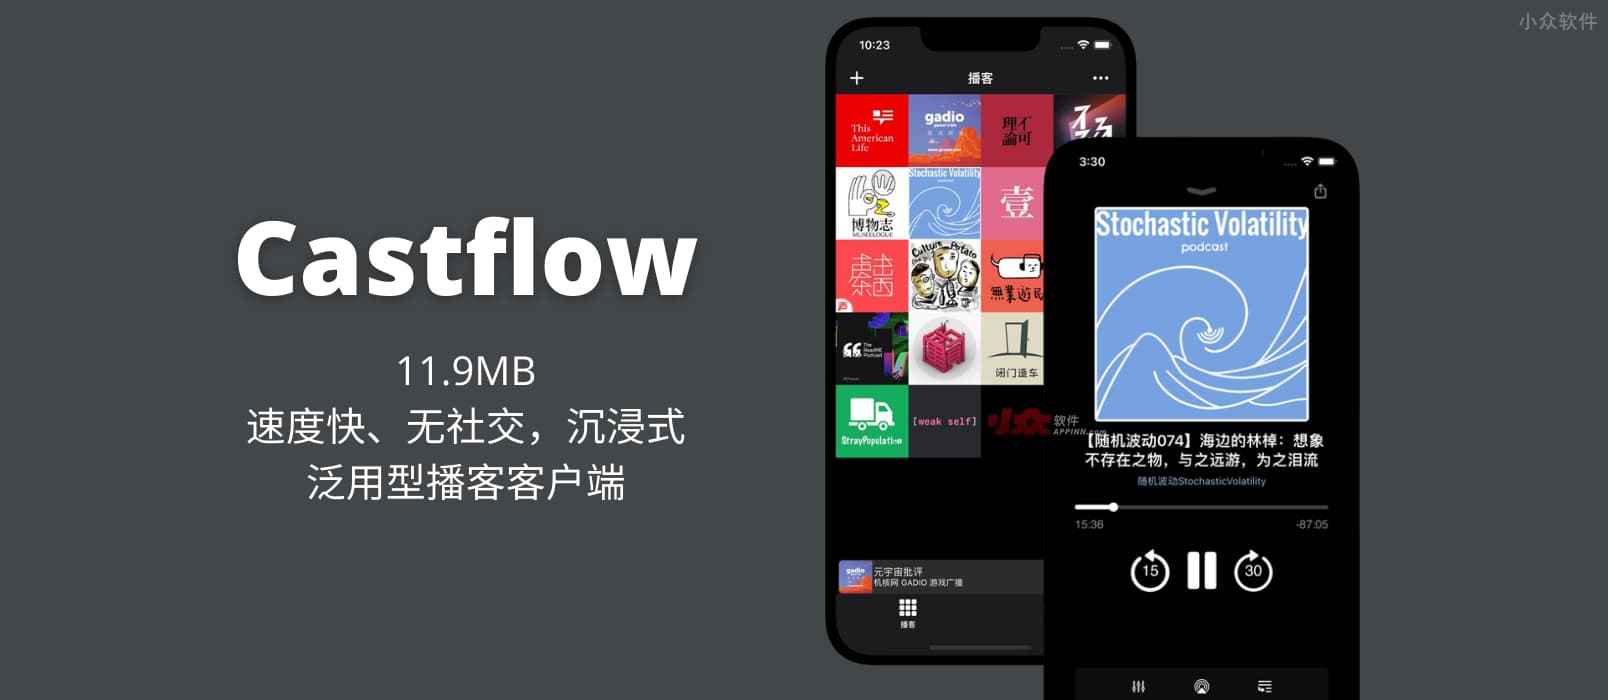 Castflow – 只有 11.9MB，速度快、无社交，沉浸式泛用型播客客户端[iPhone]